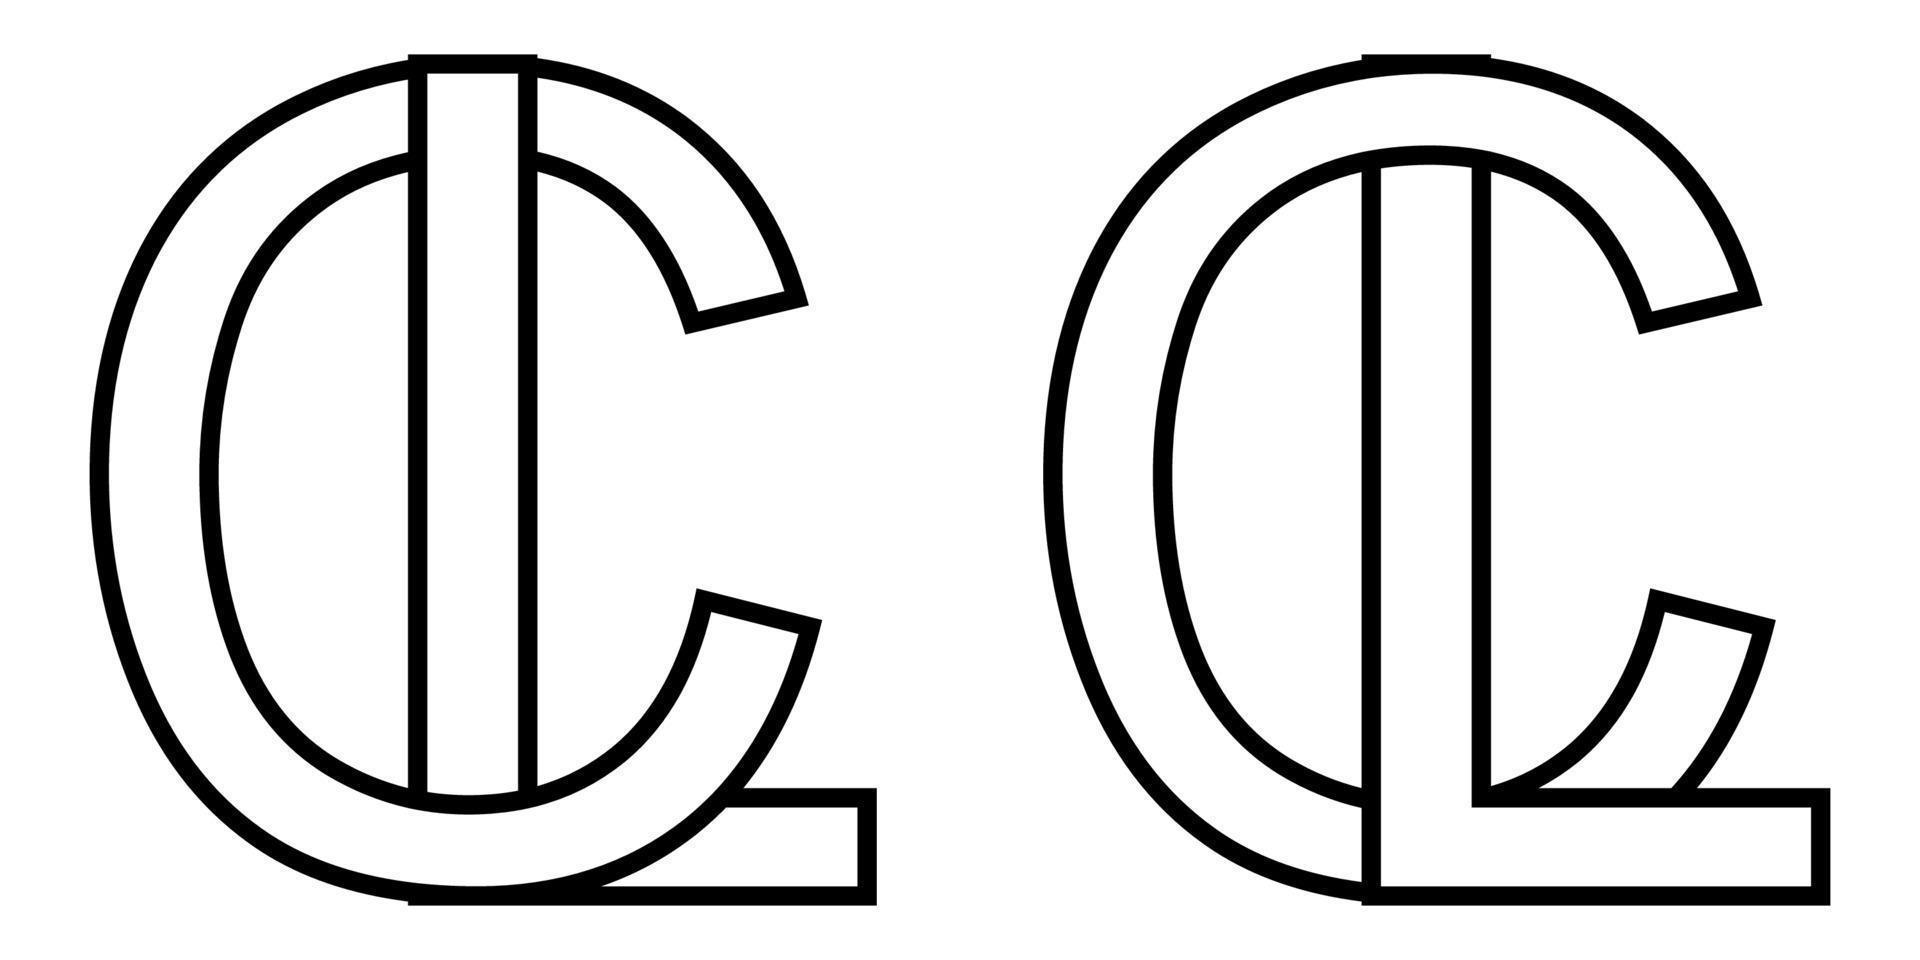 logo firmar lc y cl icono firmar dos entrelazado letras yo, C vector logo lc, cl primero capital letras modelo alfabeto yo, C